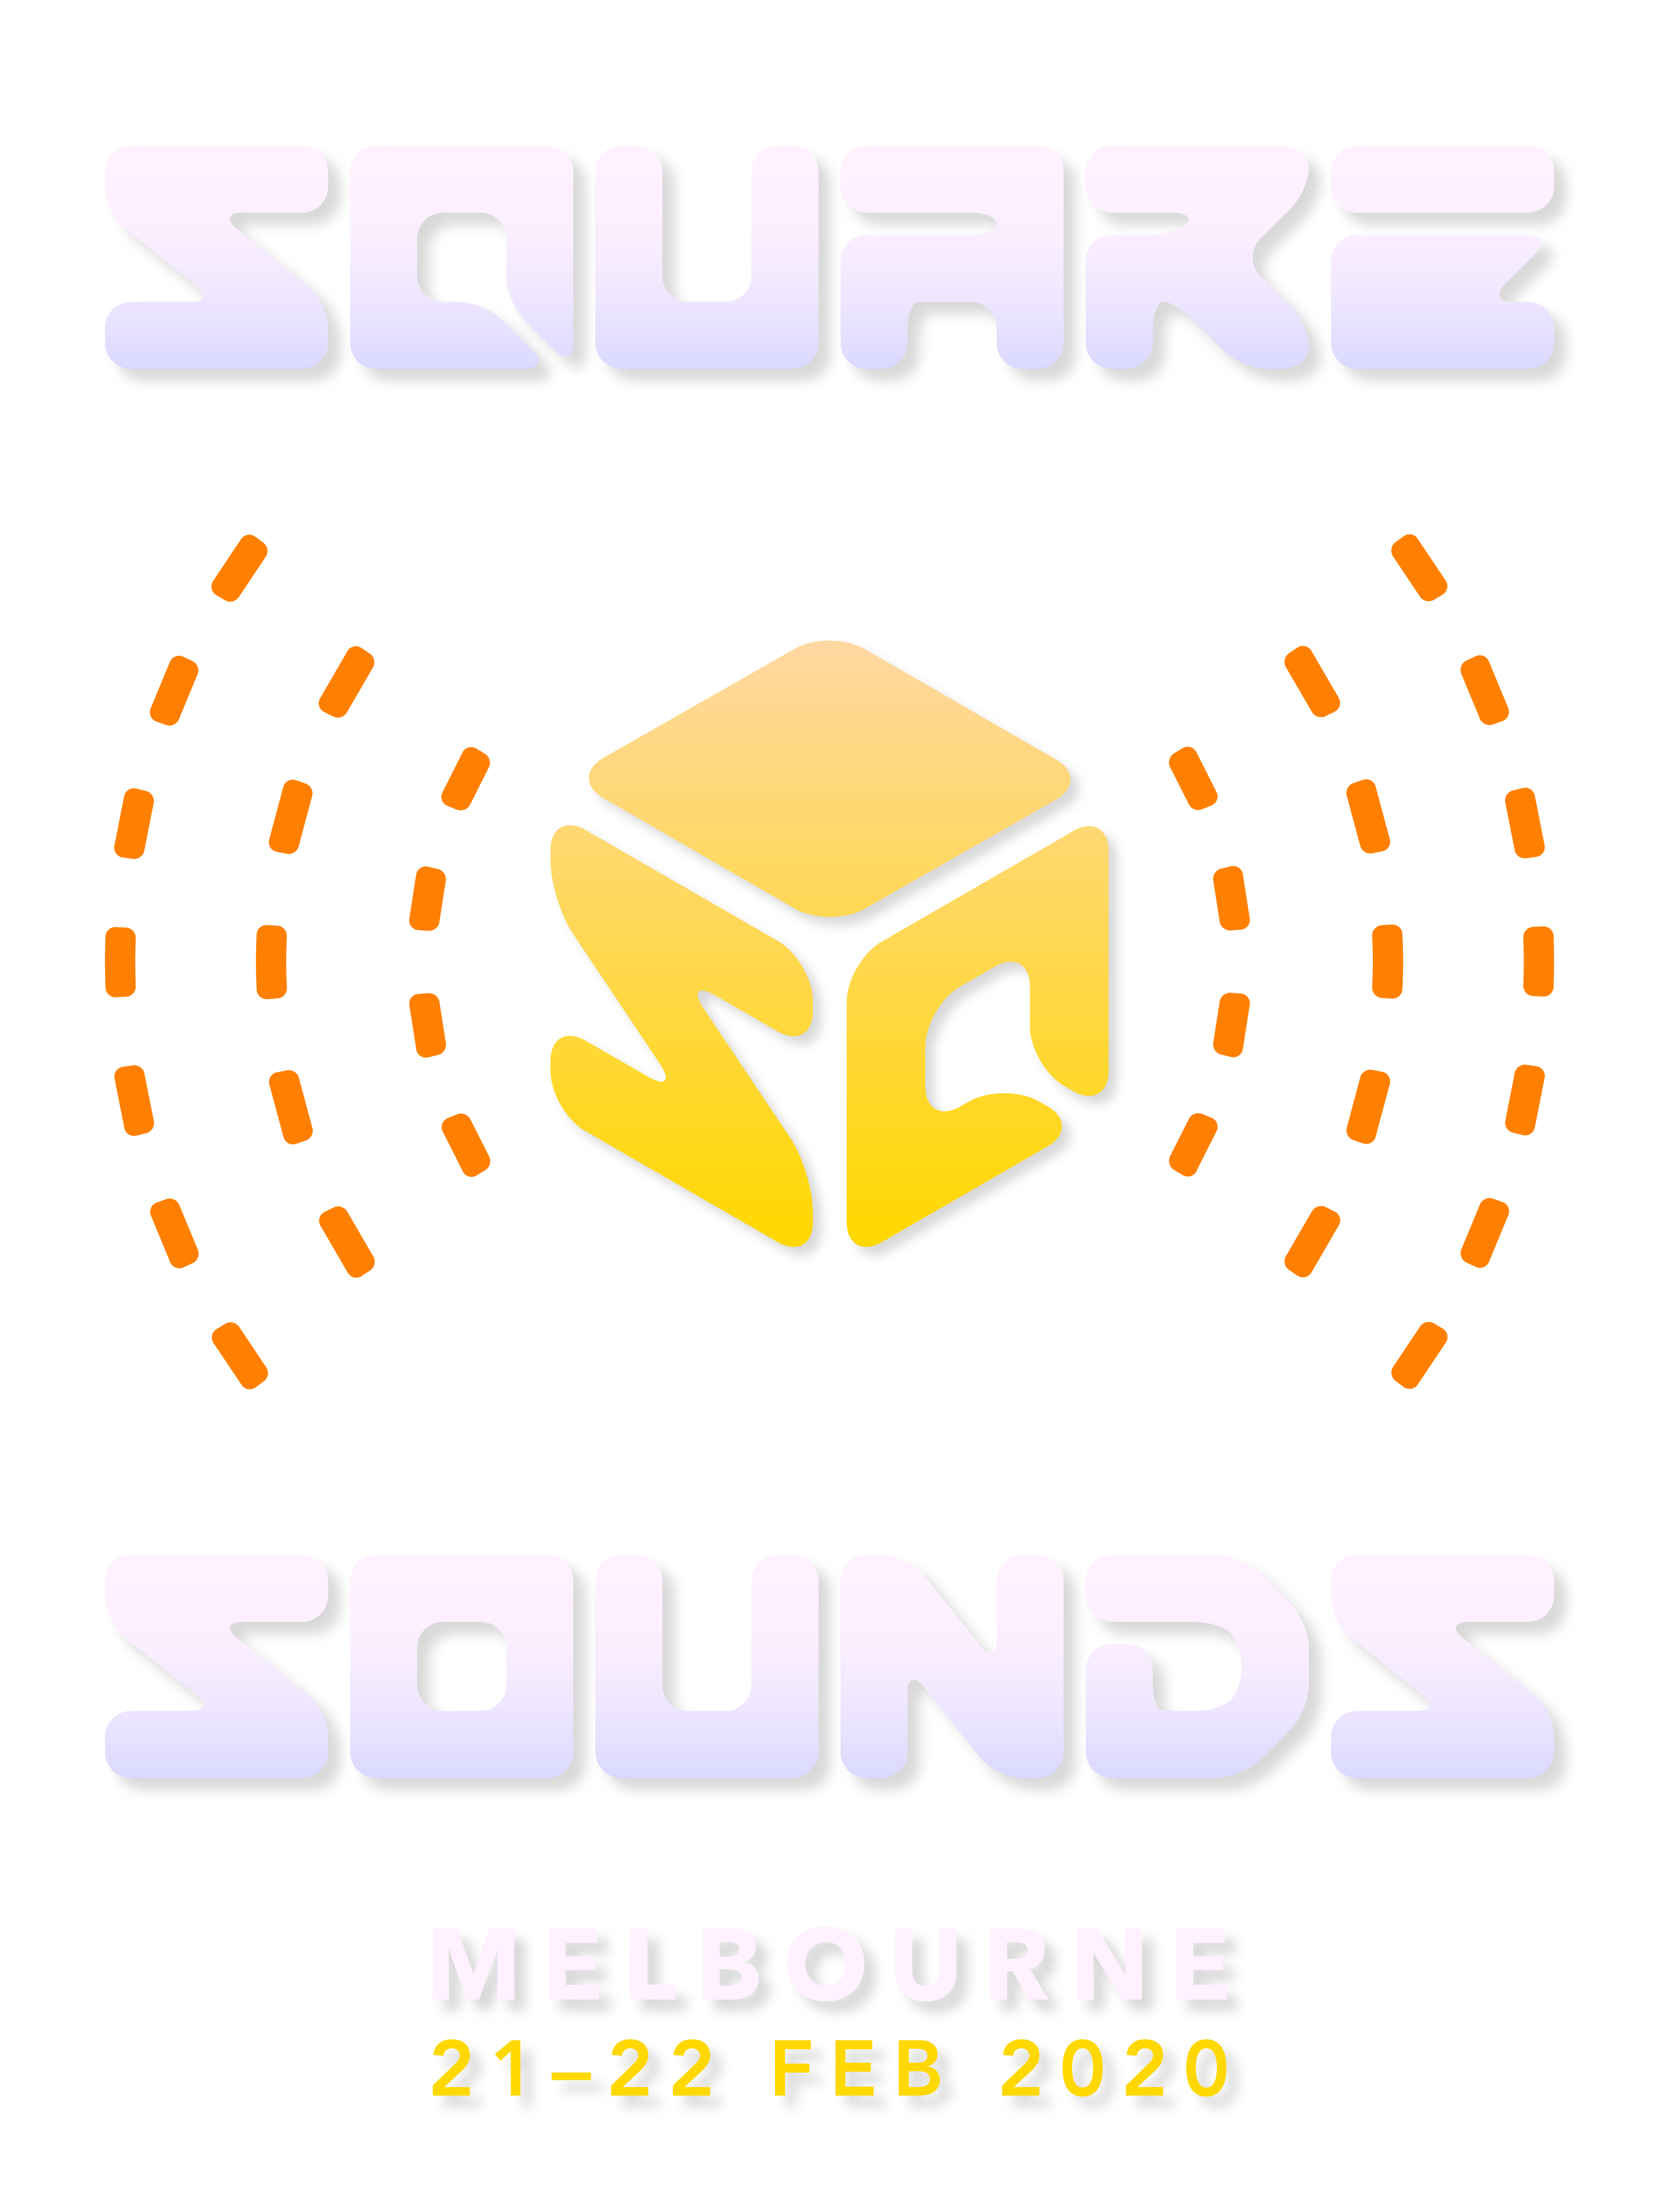 Square Sounds Melbourne 2020